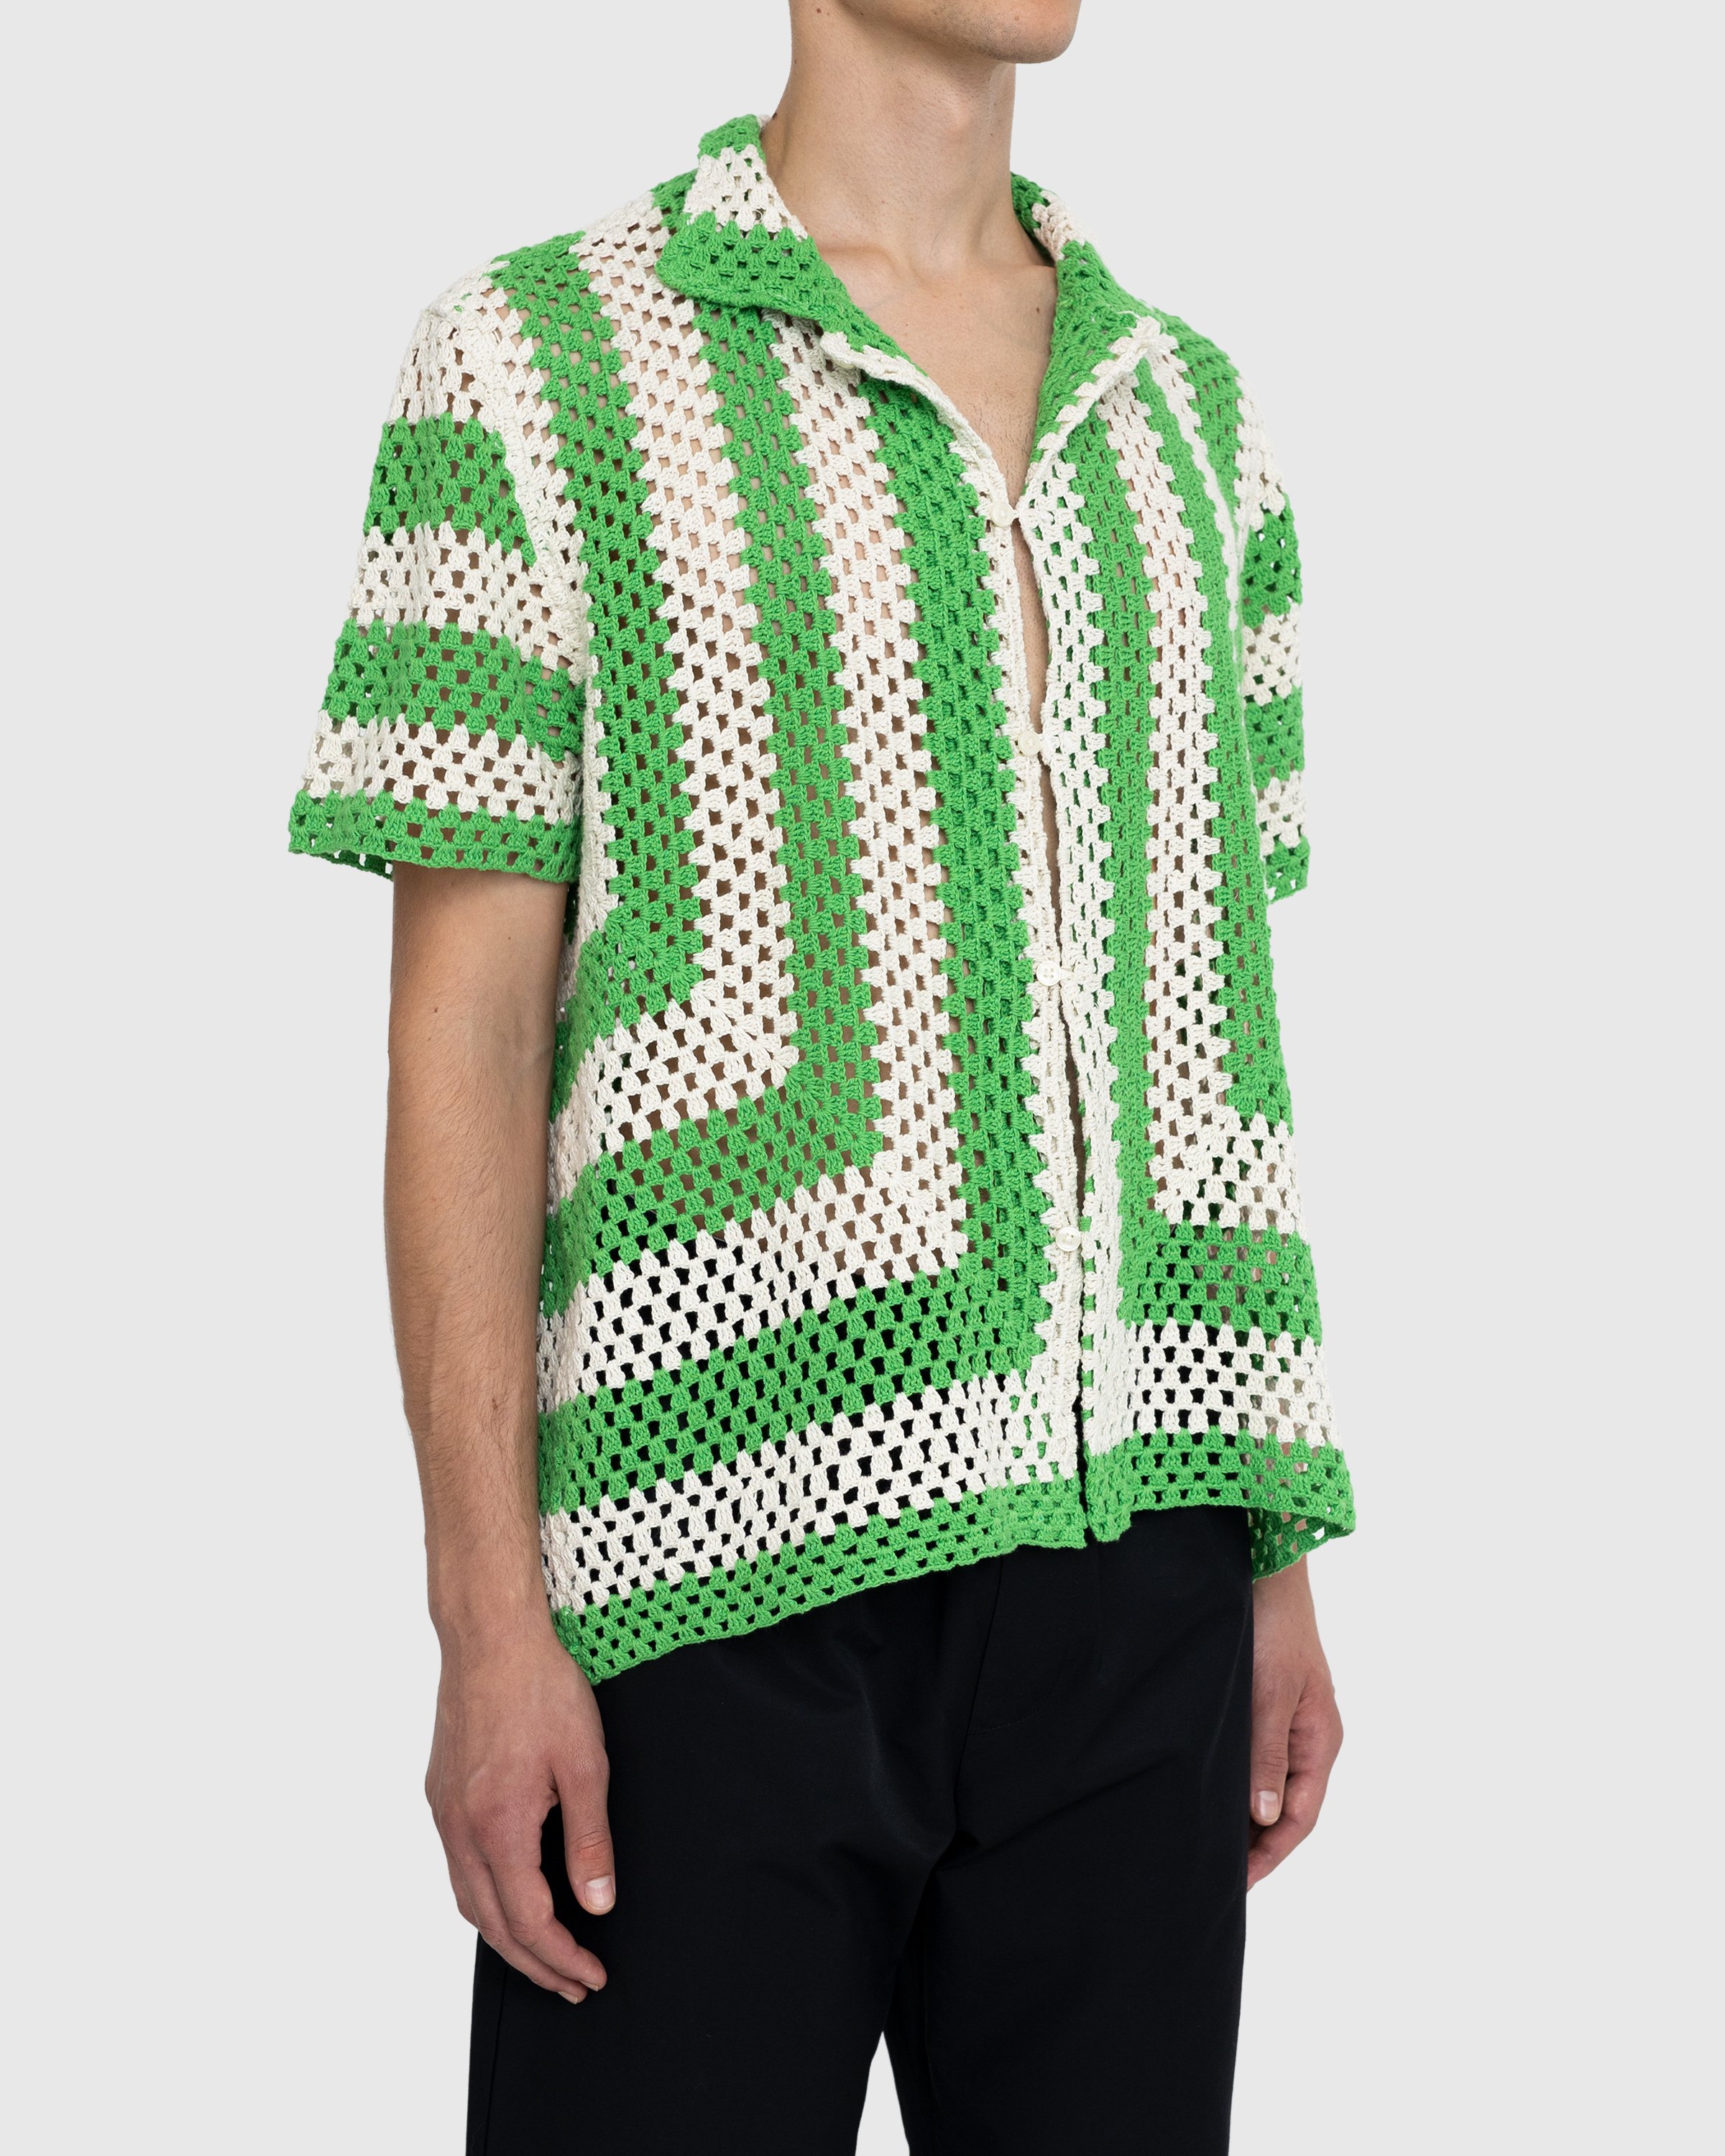 Bode - Crochet Shirt Green - Clothing - Green - Image 3